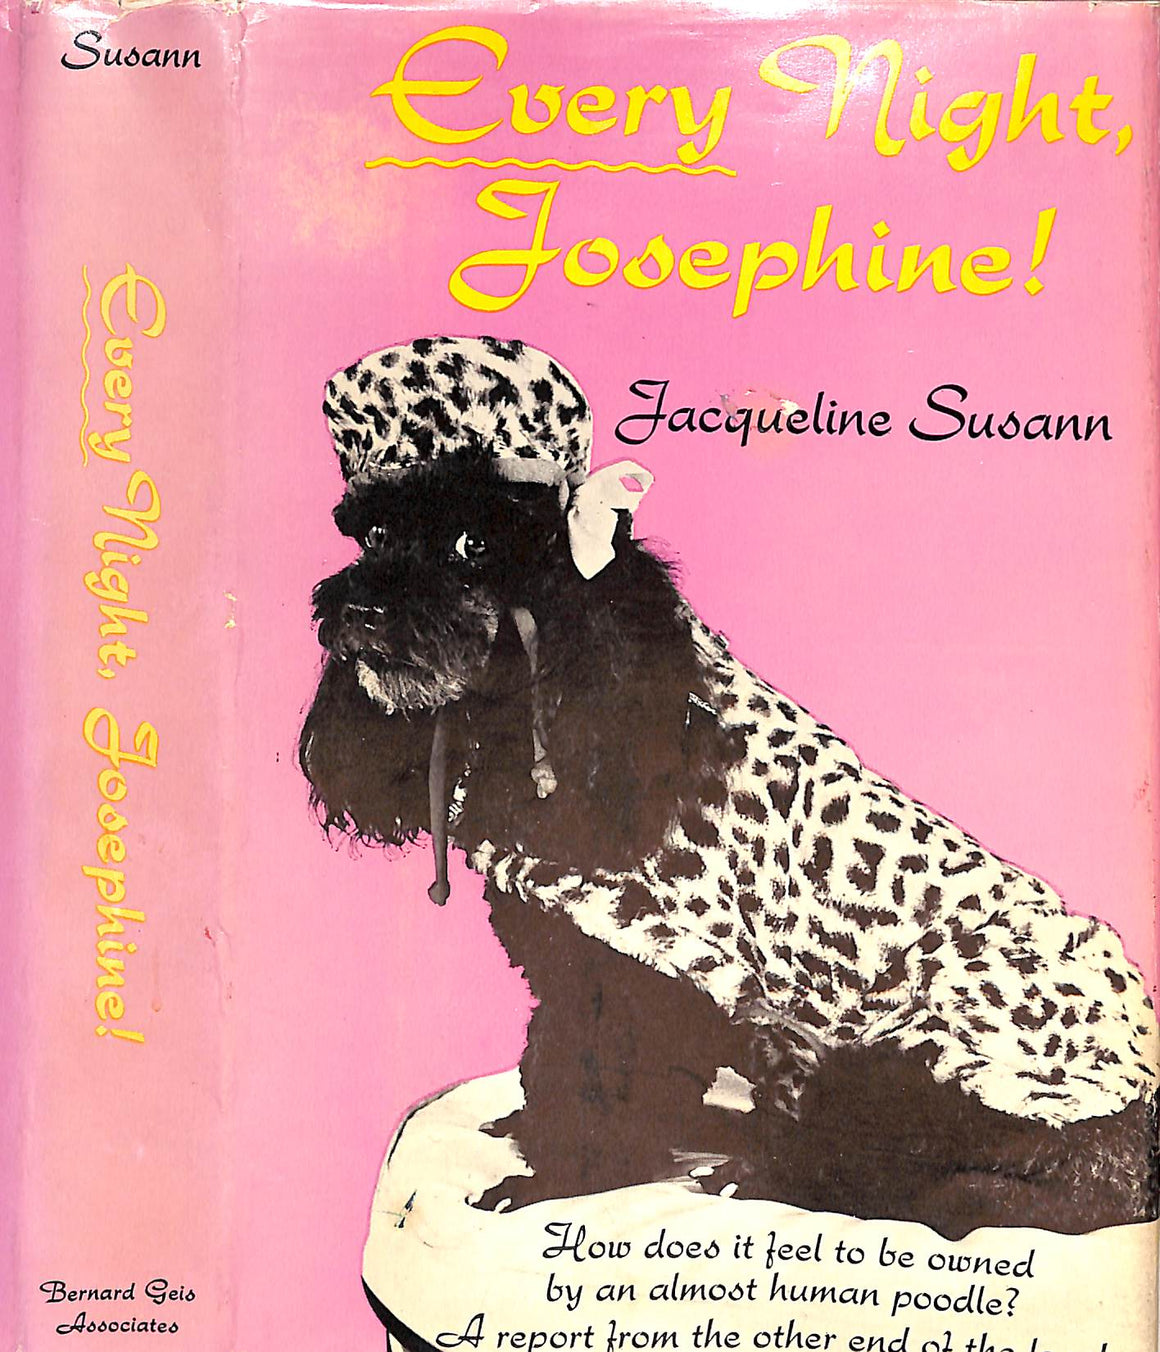 "Every Night, Josephine!" 1963 SUSANN, Jacqueline (INSCRIBED)